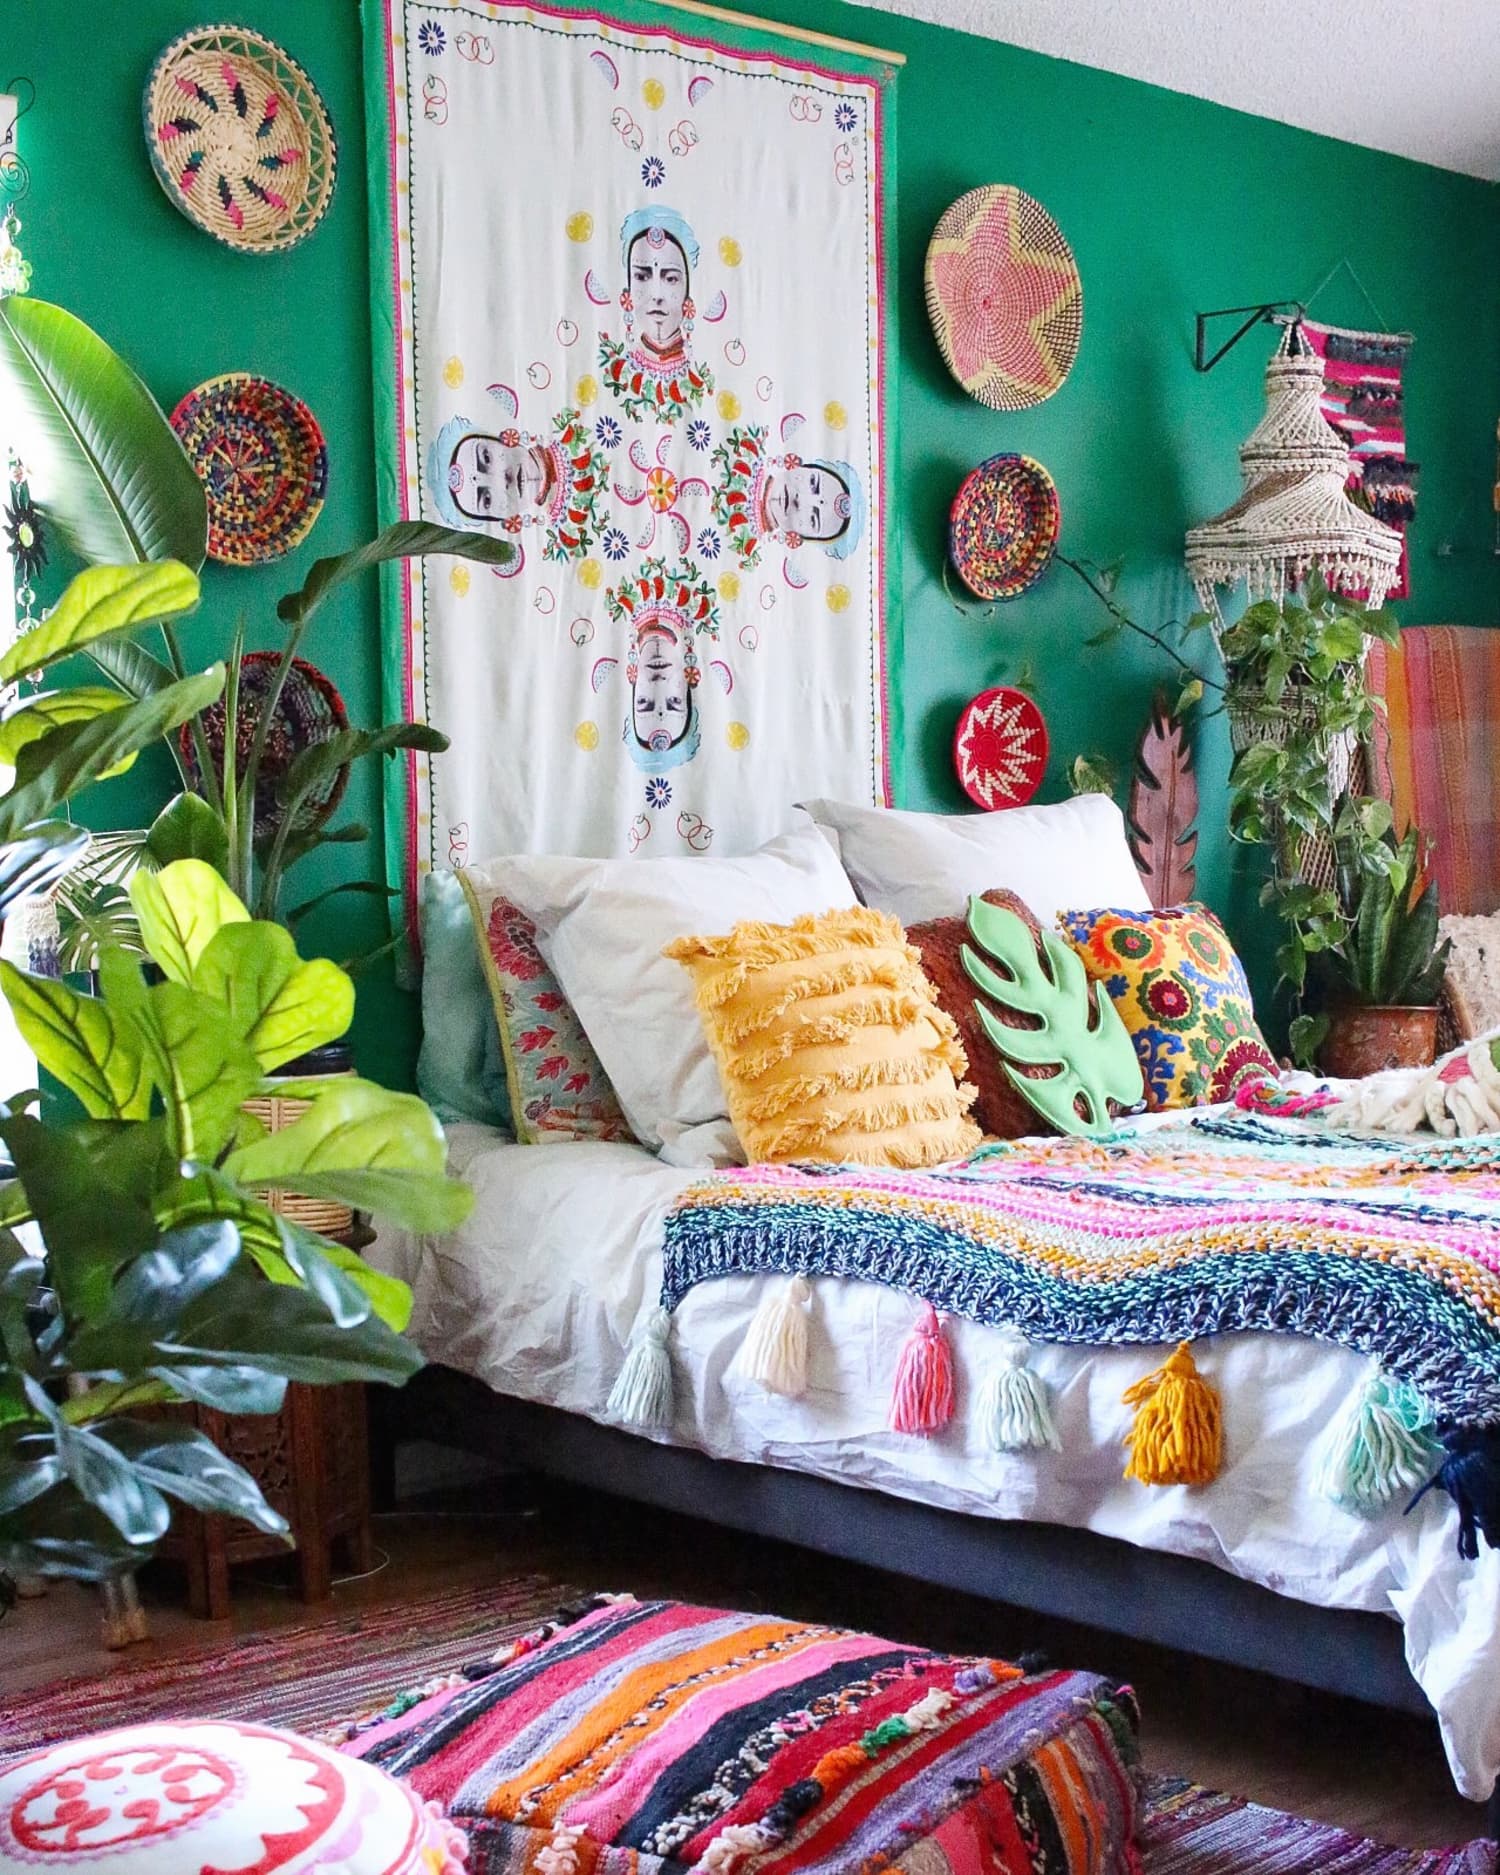 Bohemian Design Trends Bedroom Decor Ideas Apartment Therapy